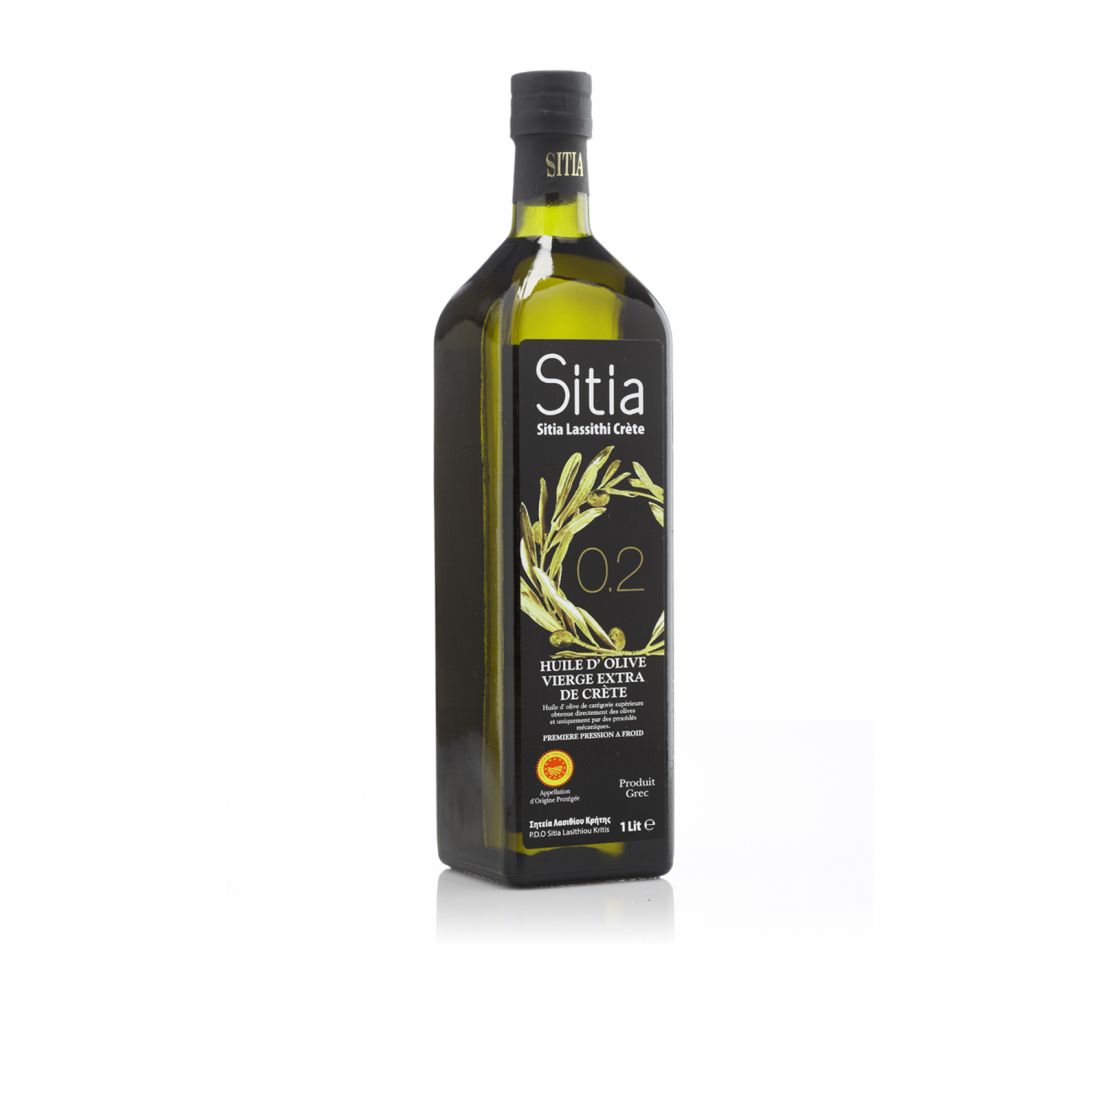 Оливковое масло SITIA - 1 л 0.2 экстра вирджин PDO стекло